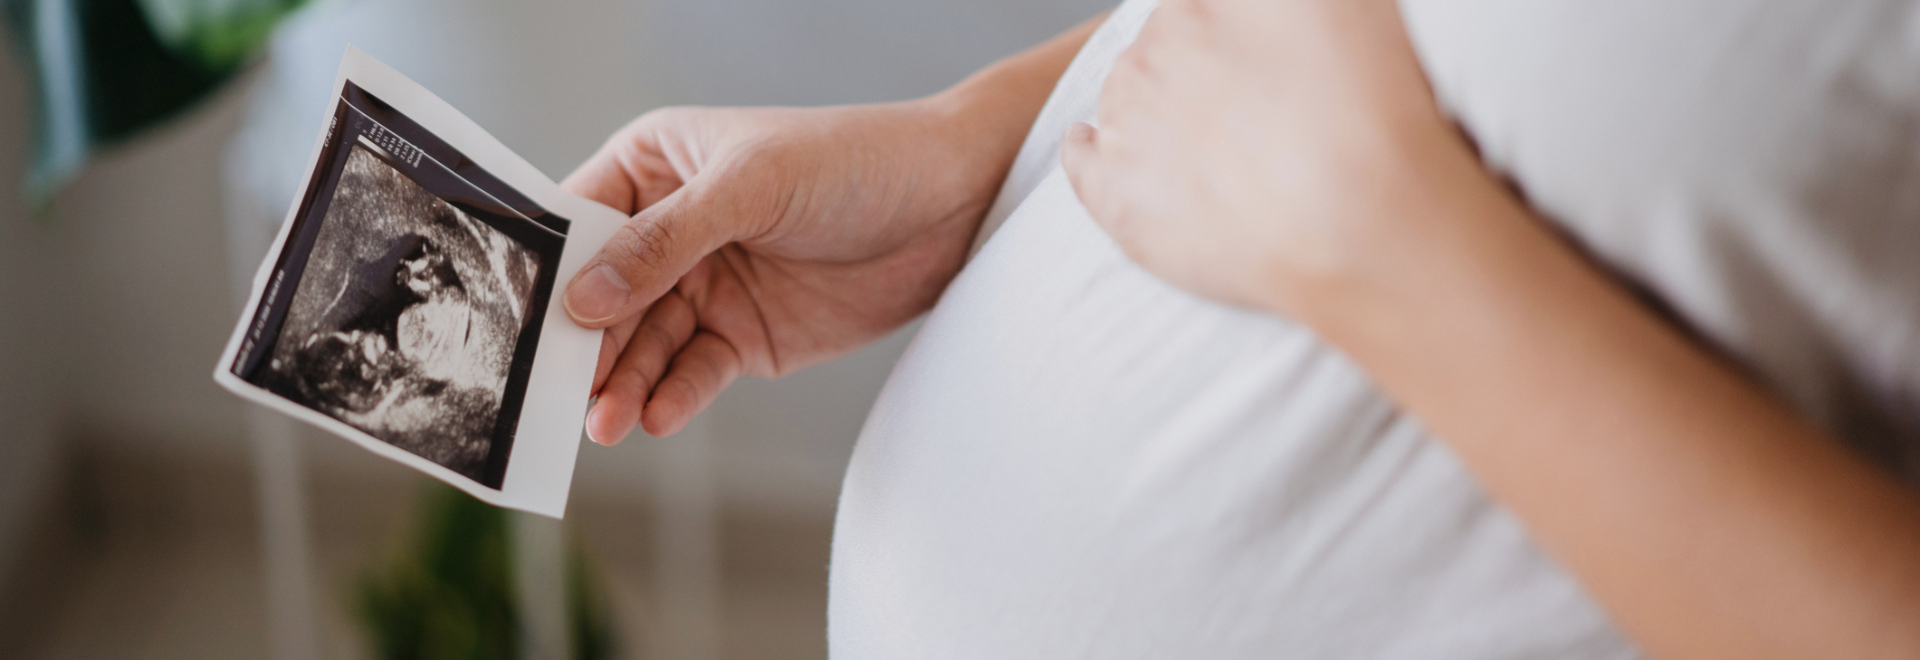 ectopic-pregnancy-causes-symptoms-treatment-prevention